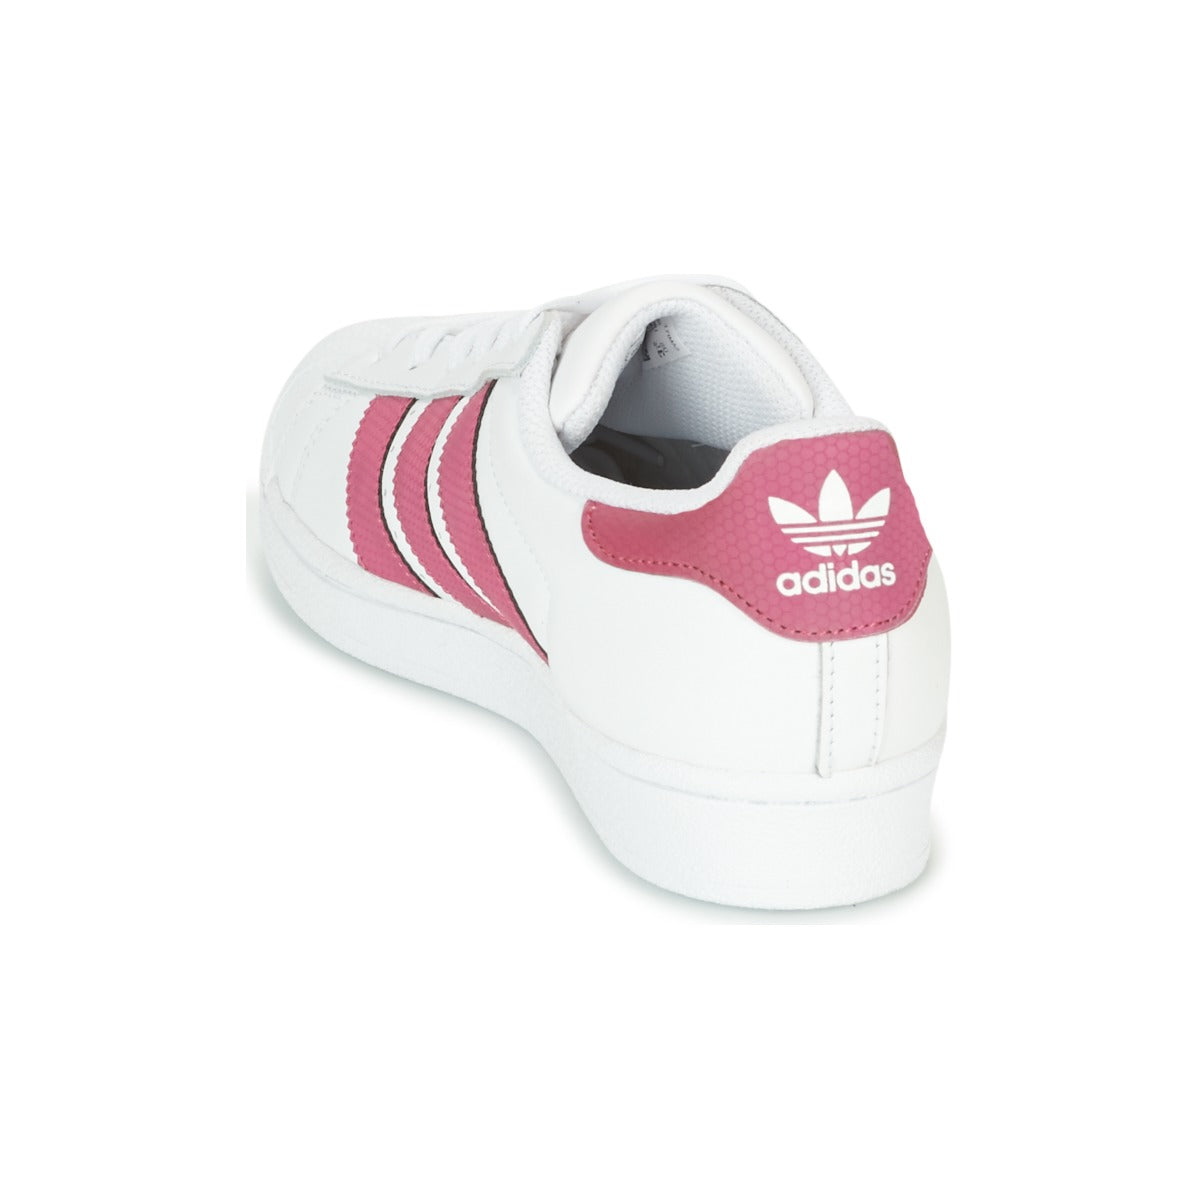 Adidas-Superstar-J-CQ2690-Junior